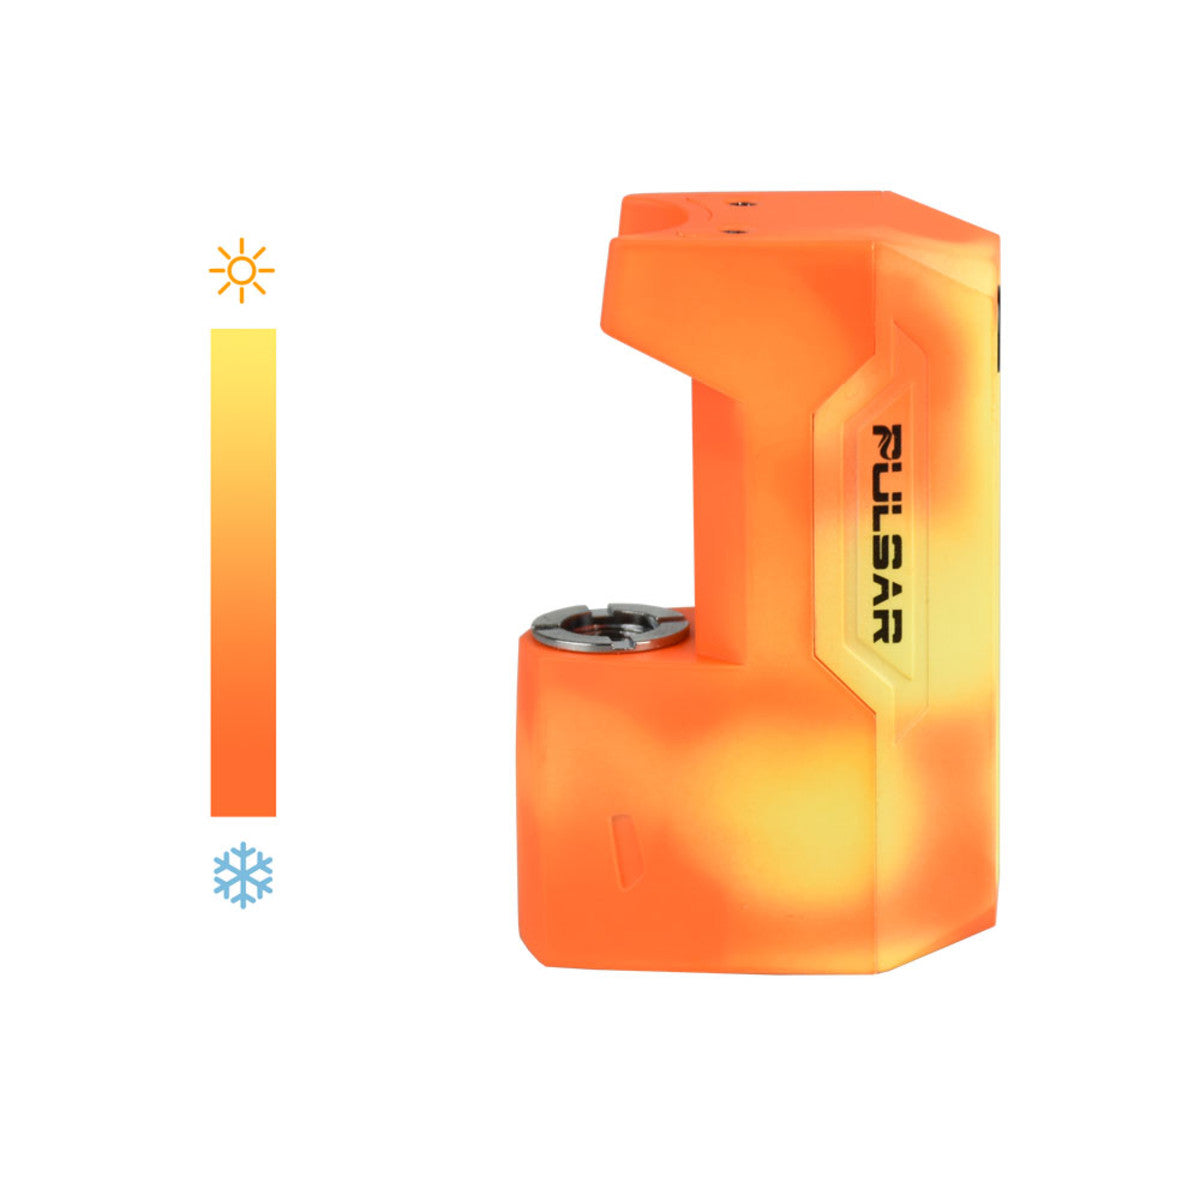 pulsar gigi 510 cartridge vaporizer orange yellow thermochromic